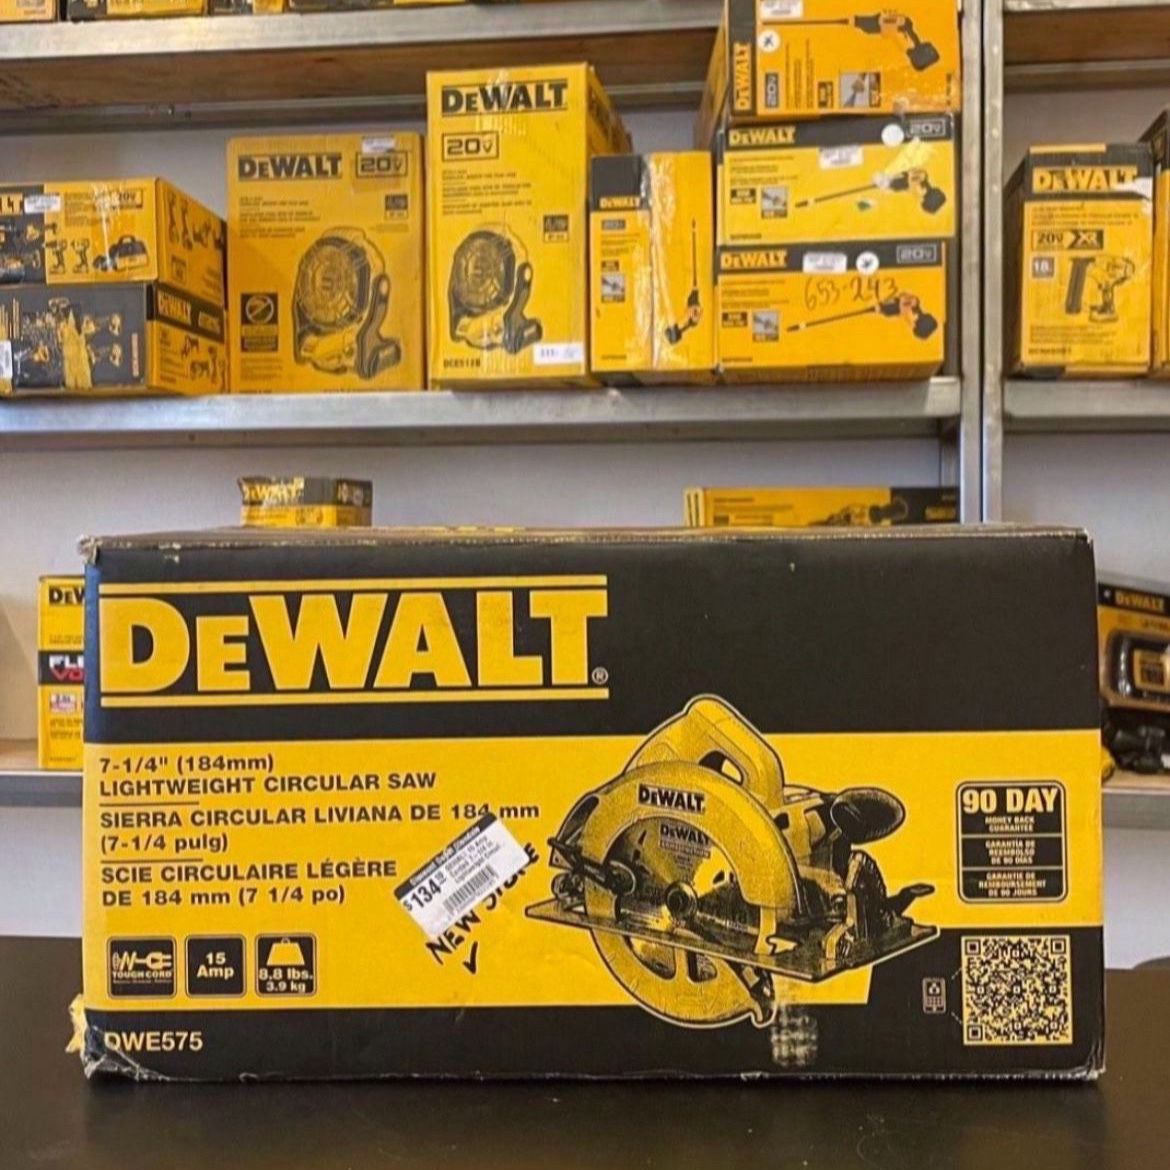  DEWALT 15 Amp Corded 7-1/4 in. Lightweight Circular Saw ……DWE575